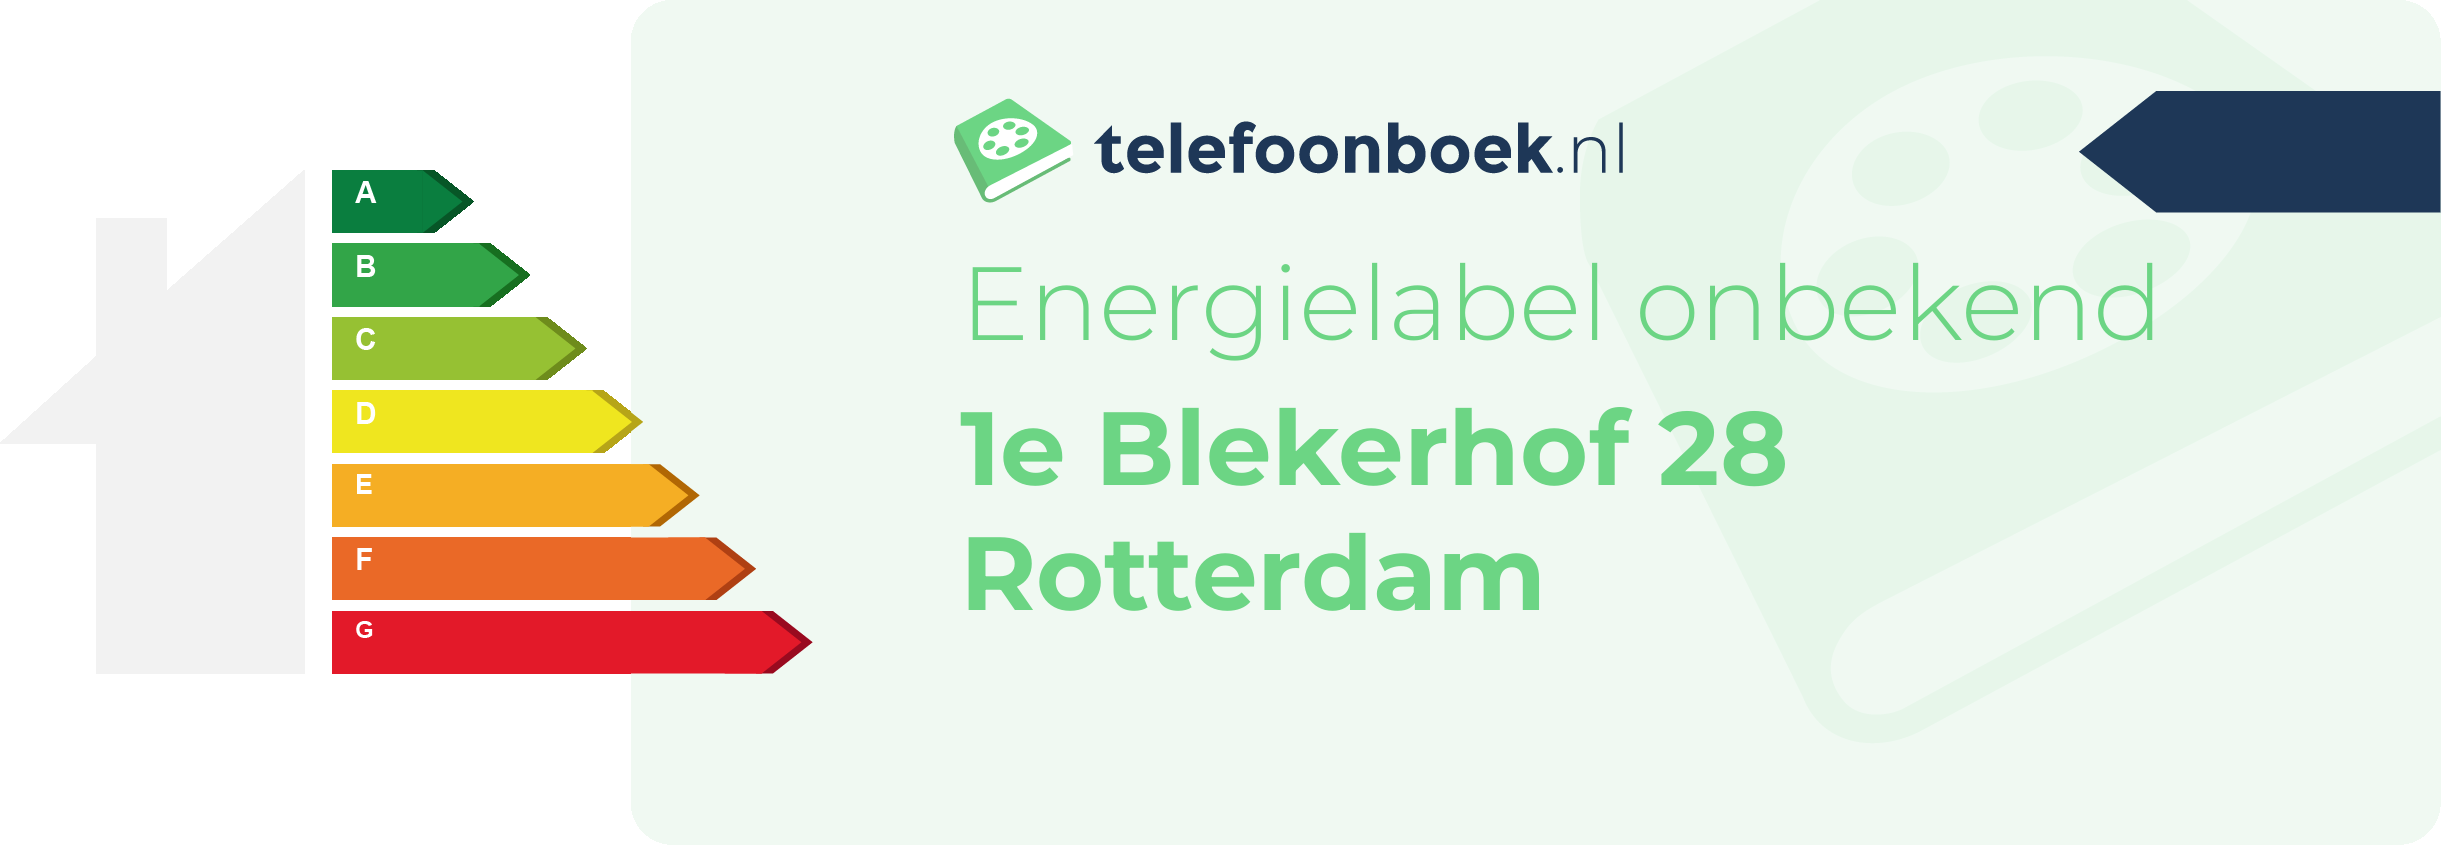 Energielabel 1e Blekerhof 28 Rotterdam